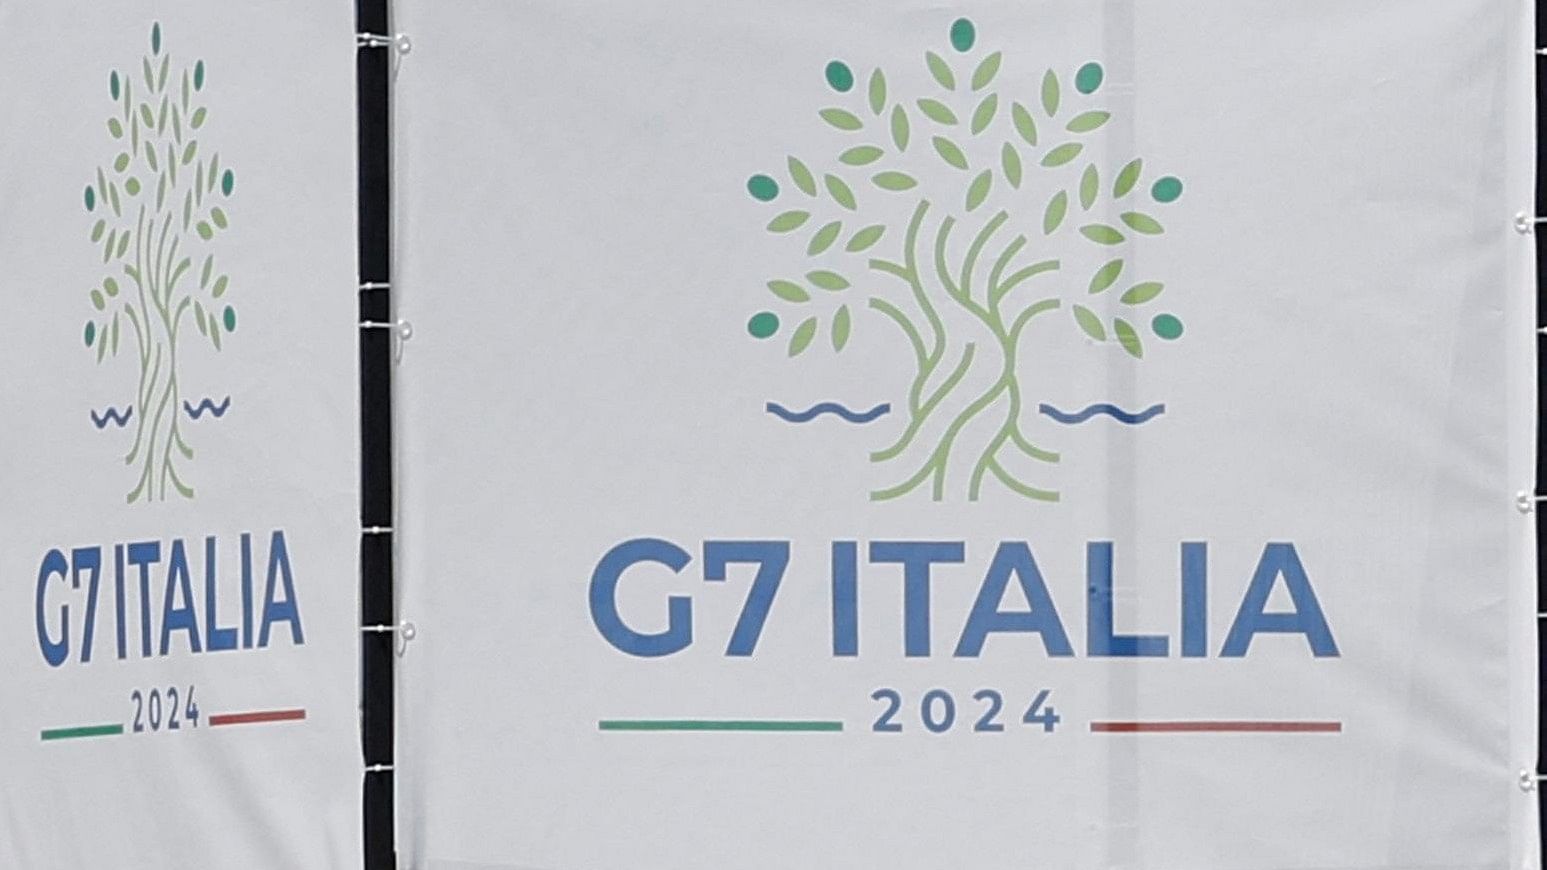 <div class="paragraphs"><p>G7 Italy logo in Bari, Italy.</p></div>